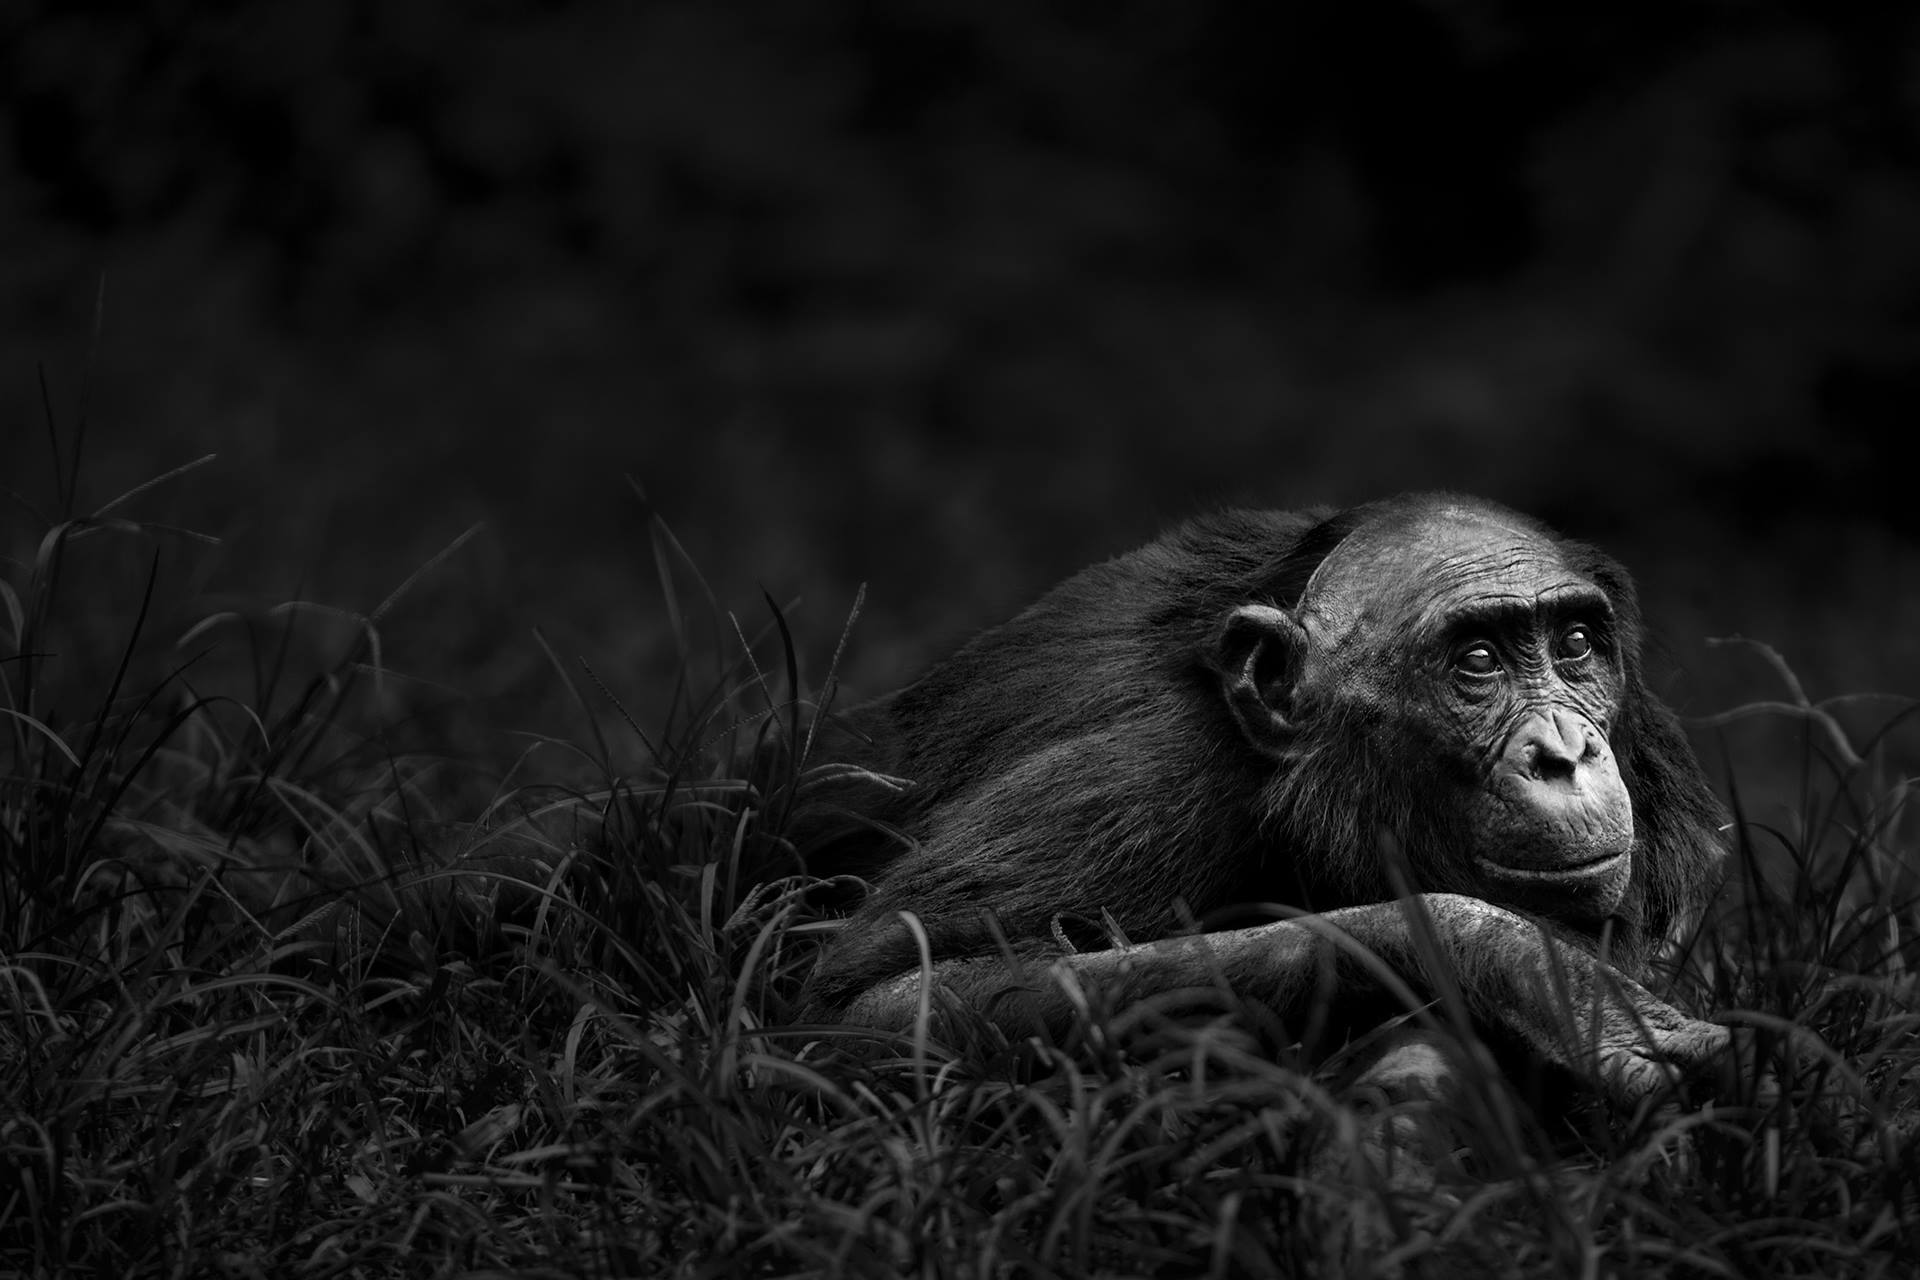 Serie primates. S/T, 2014<br/>